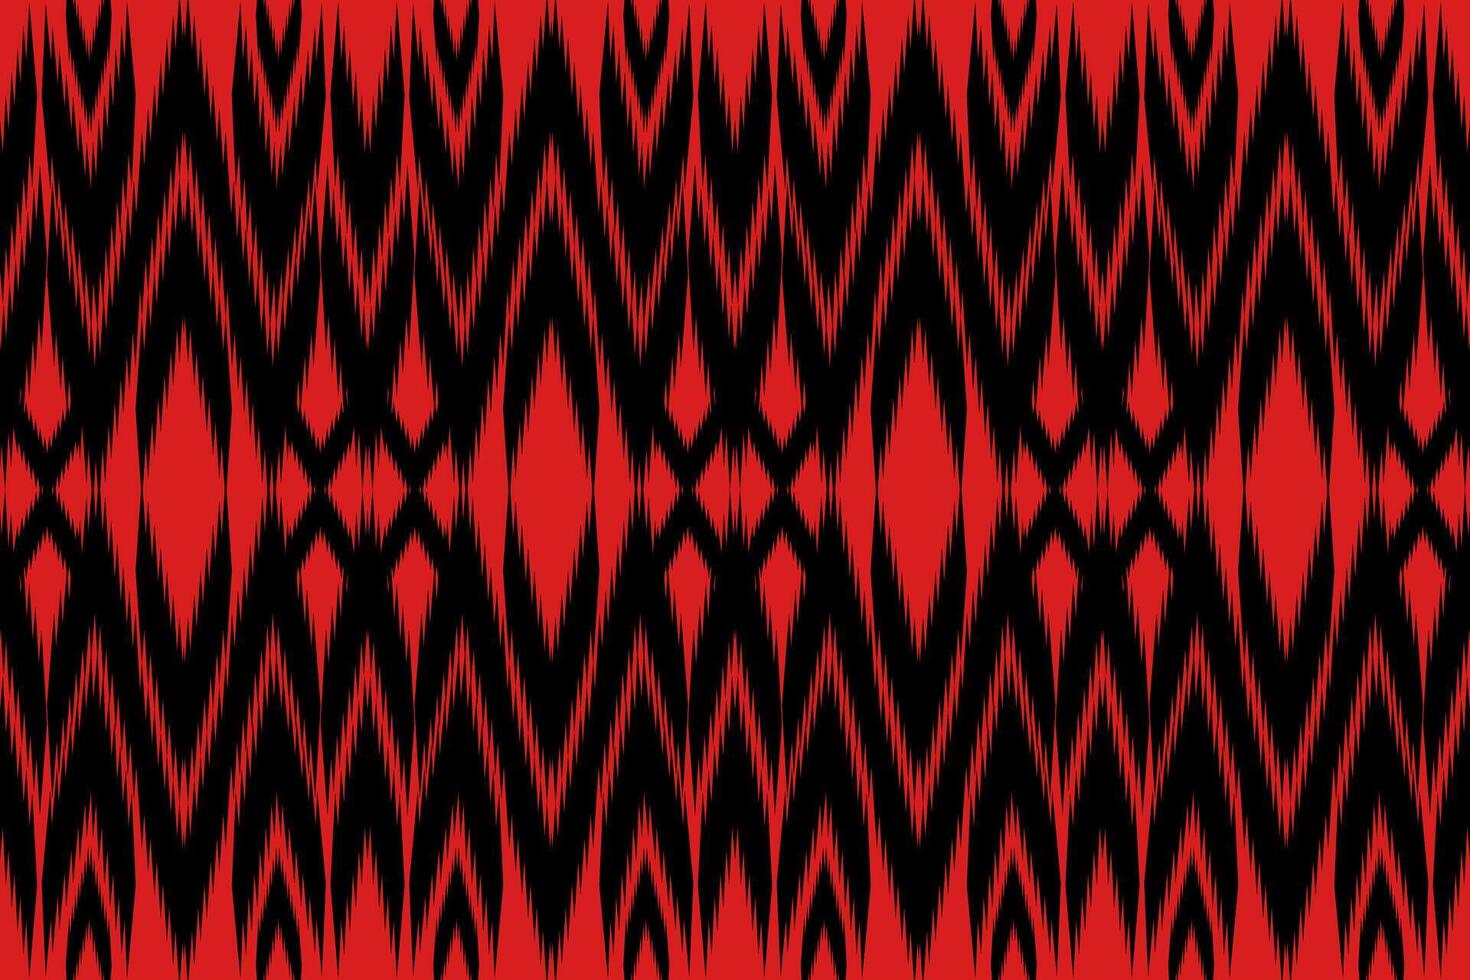 Black Ikat fabric seamless pattern vector